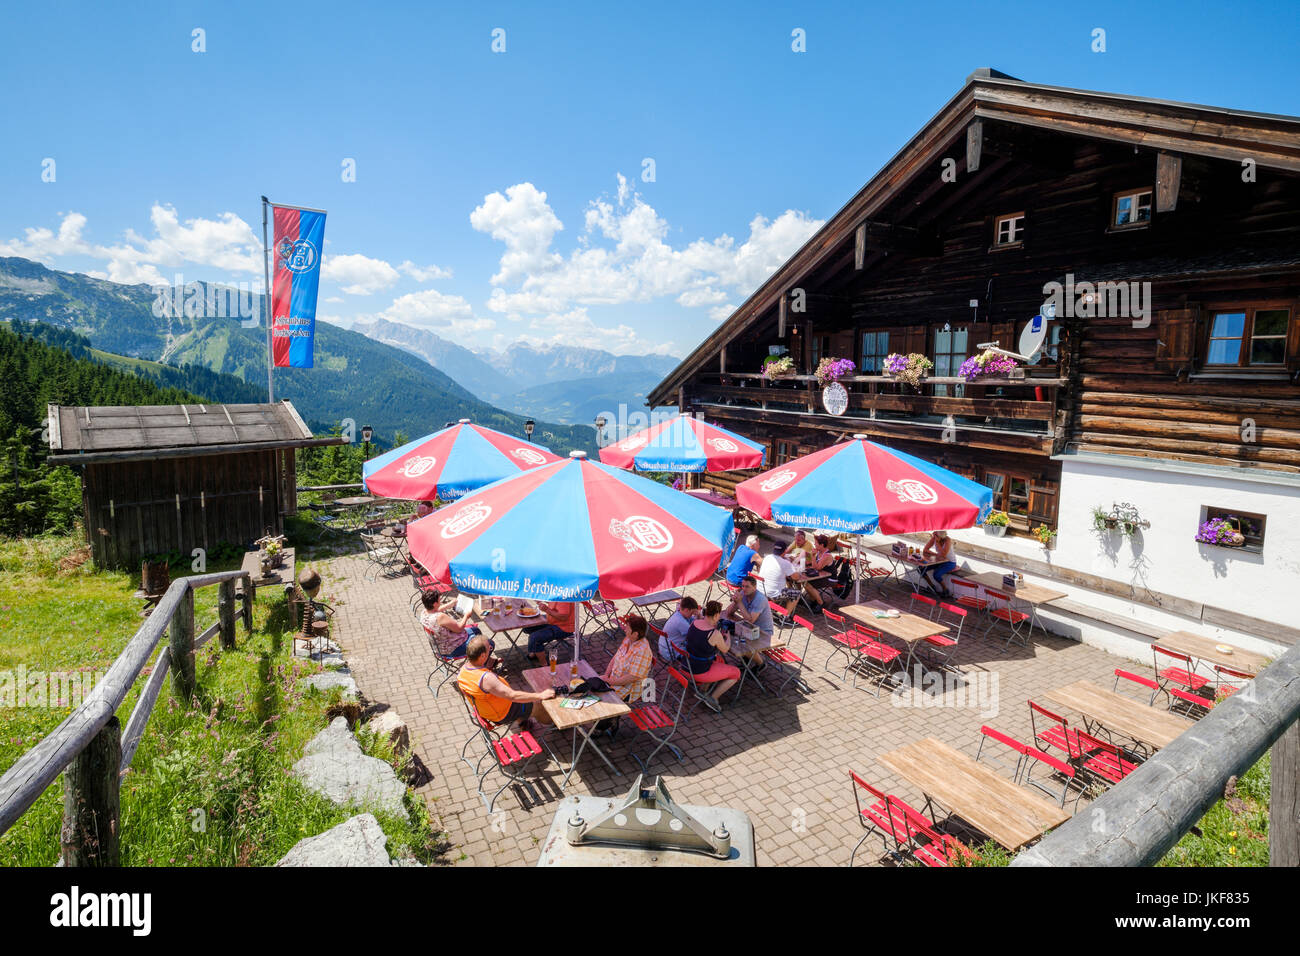 Rossfeld Skihütte Restaurant, Berchtesgaden, Upper Bavaria, Bavaria, Germany, Europe Banque D'Images